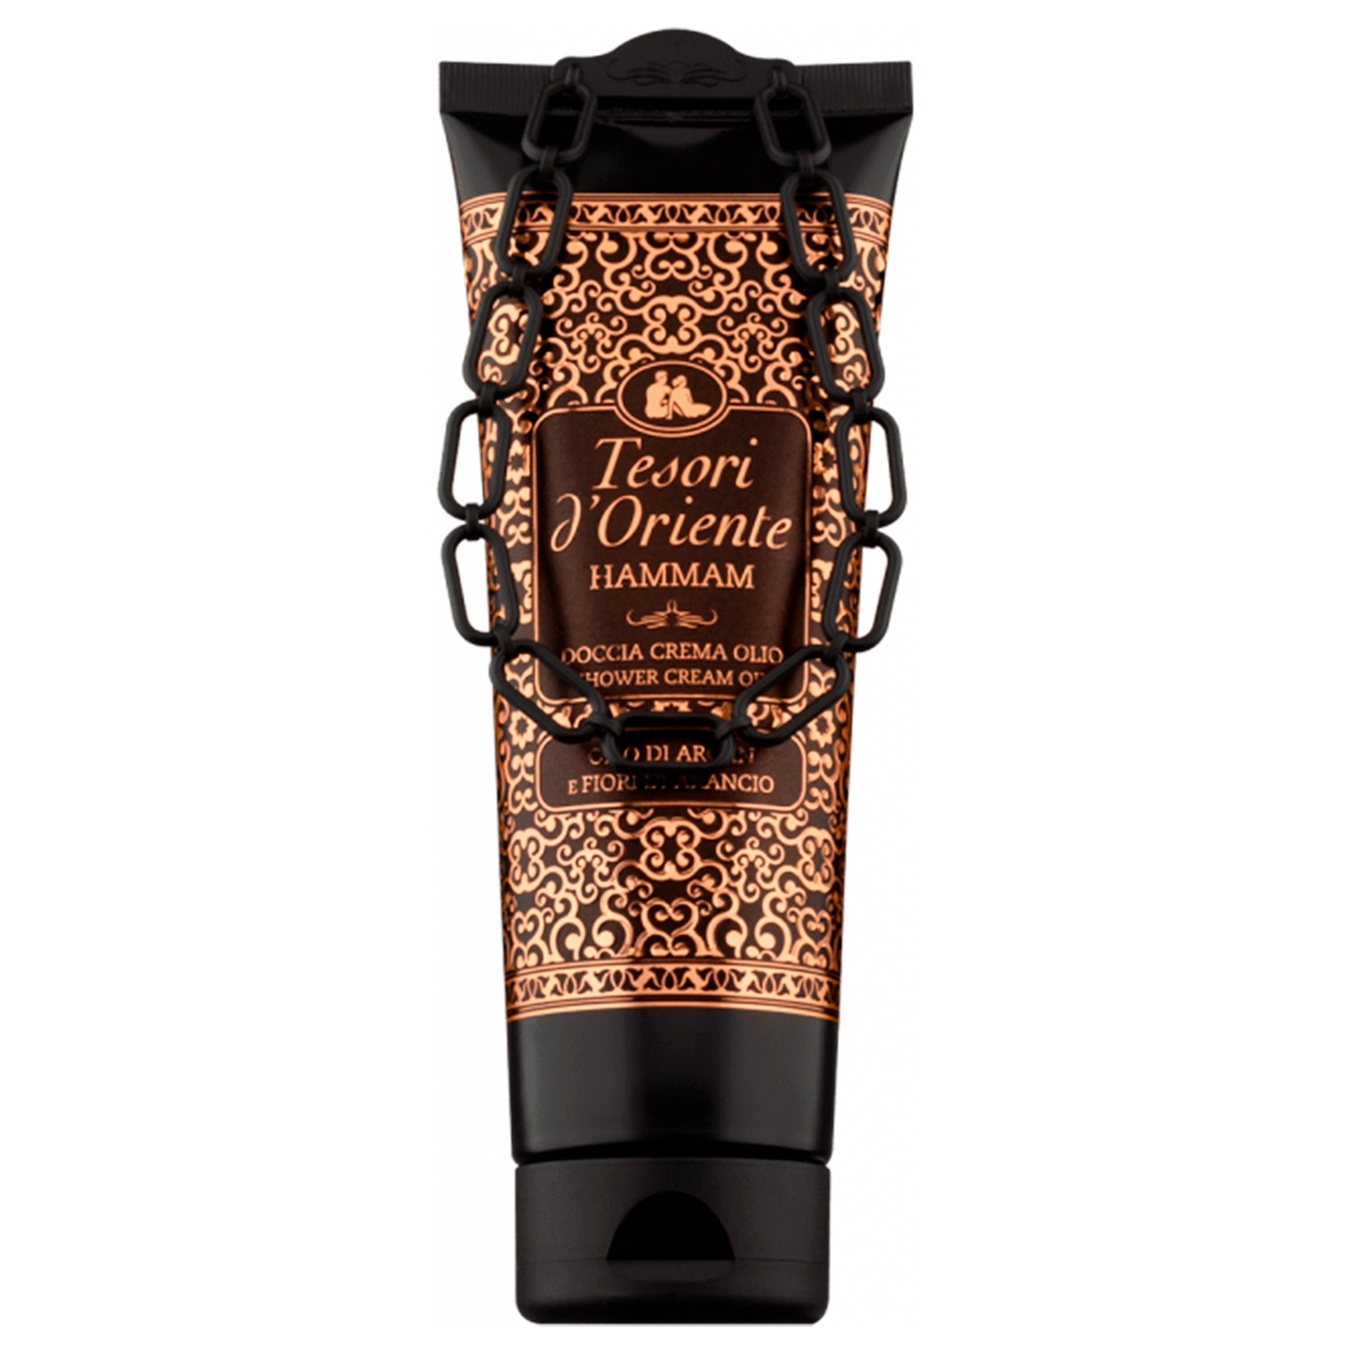 Cream-gel Tesori d'Oriente for shower perfumed hammam argan oil and orange blossom 250 ml